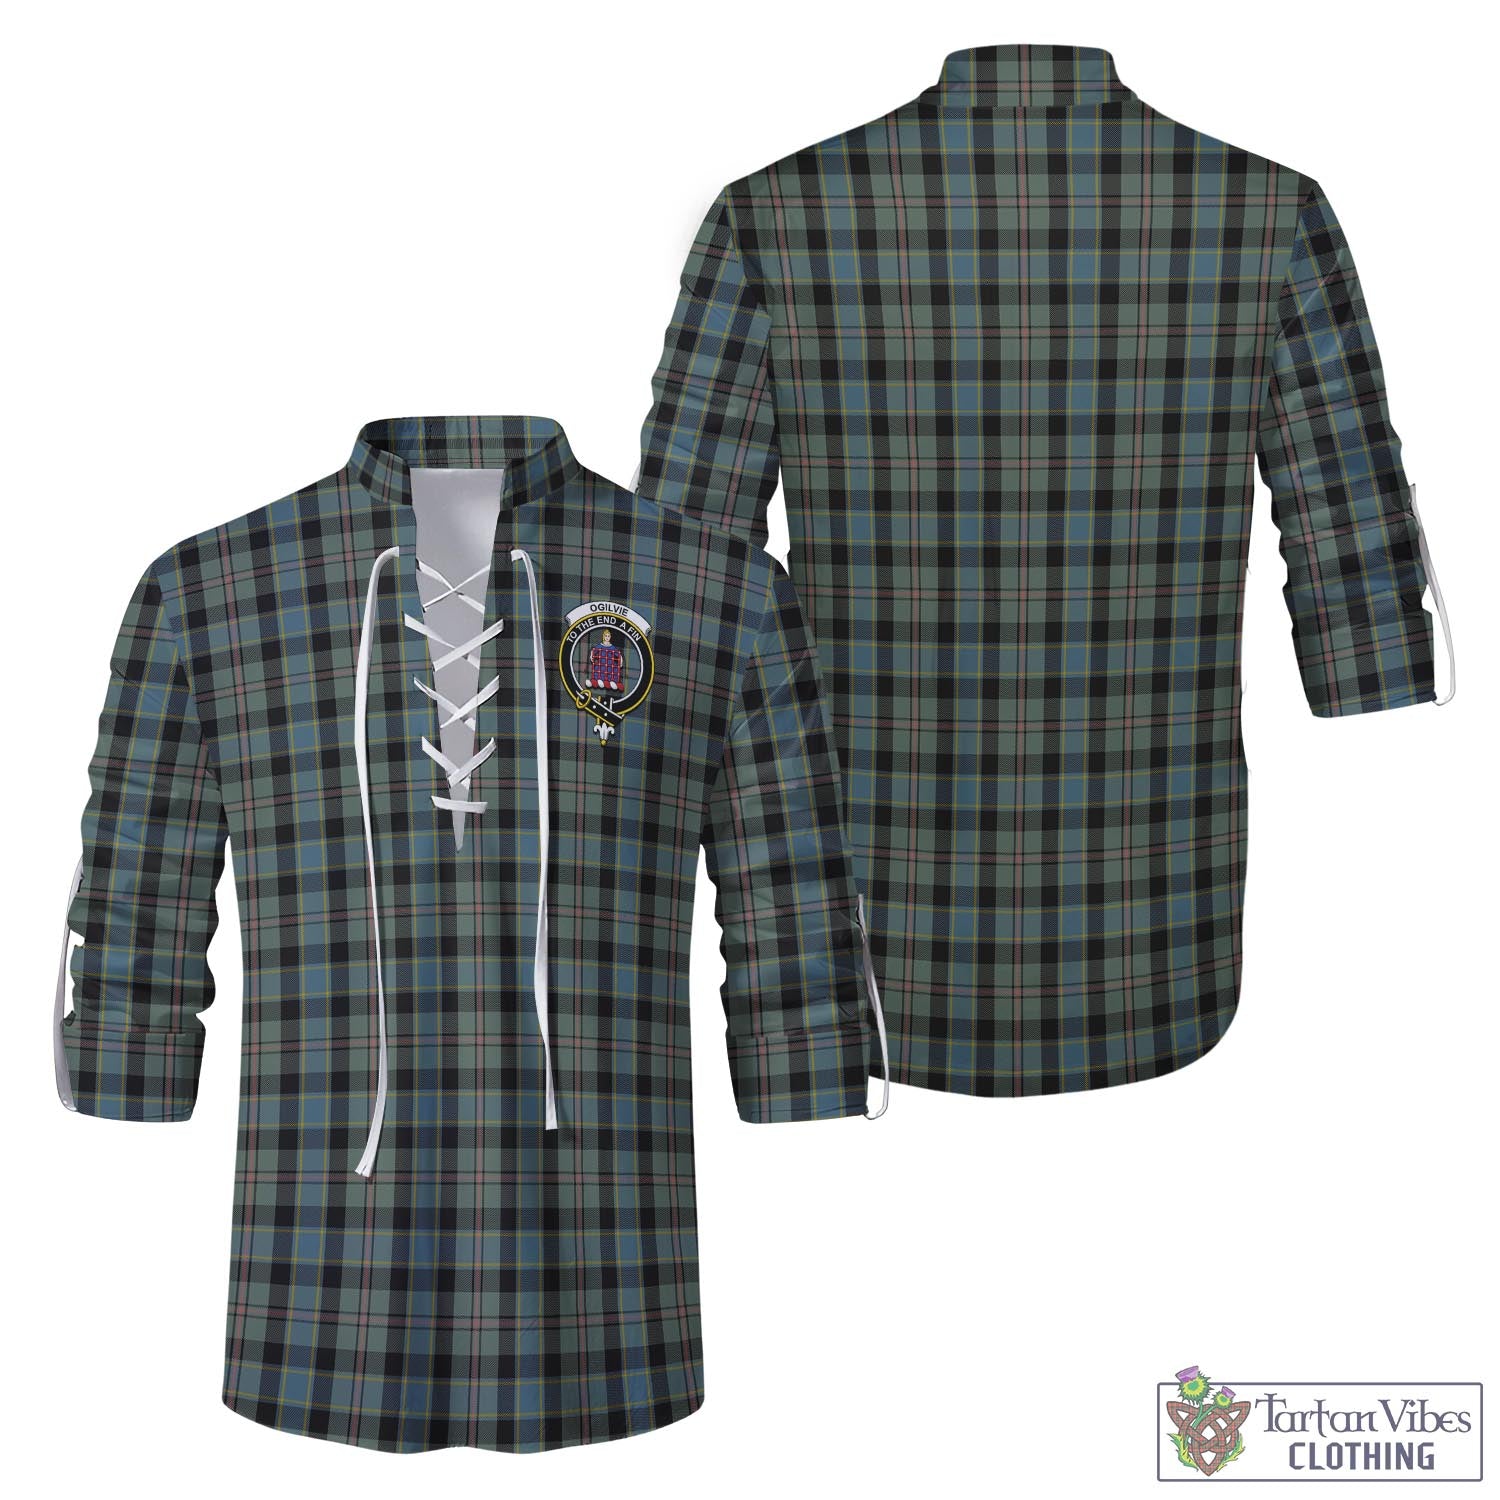 Tartan Vibes Clothing Ogilvie (Ogilvy) Hunting Tartan Men's Scottish Traditional Jacobite Ghillie Kilt Shirt with Family Crest